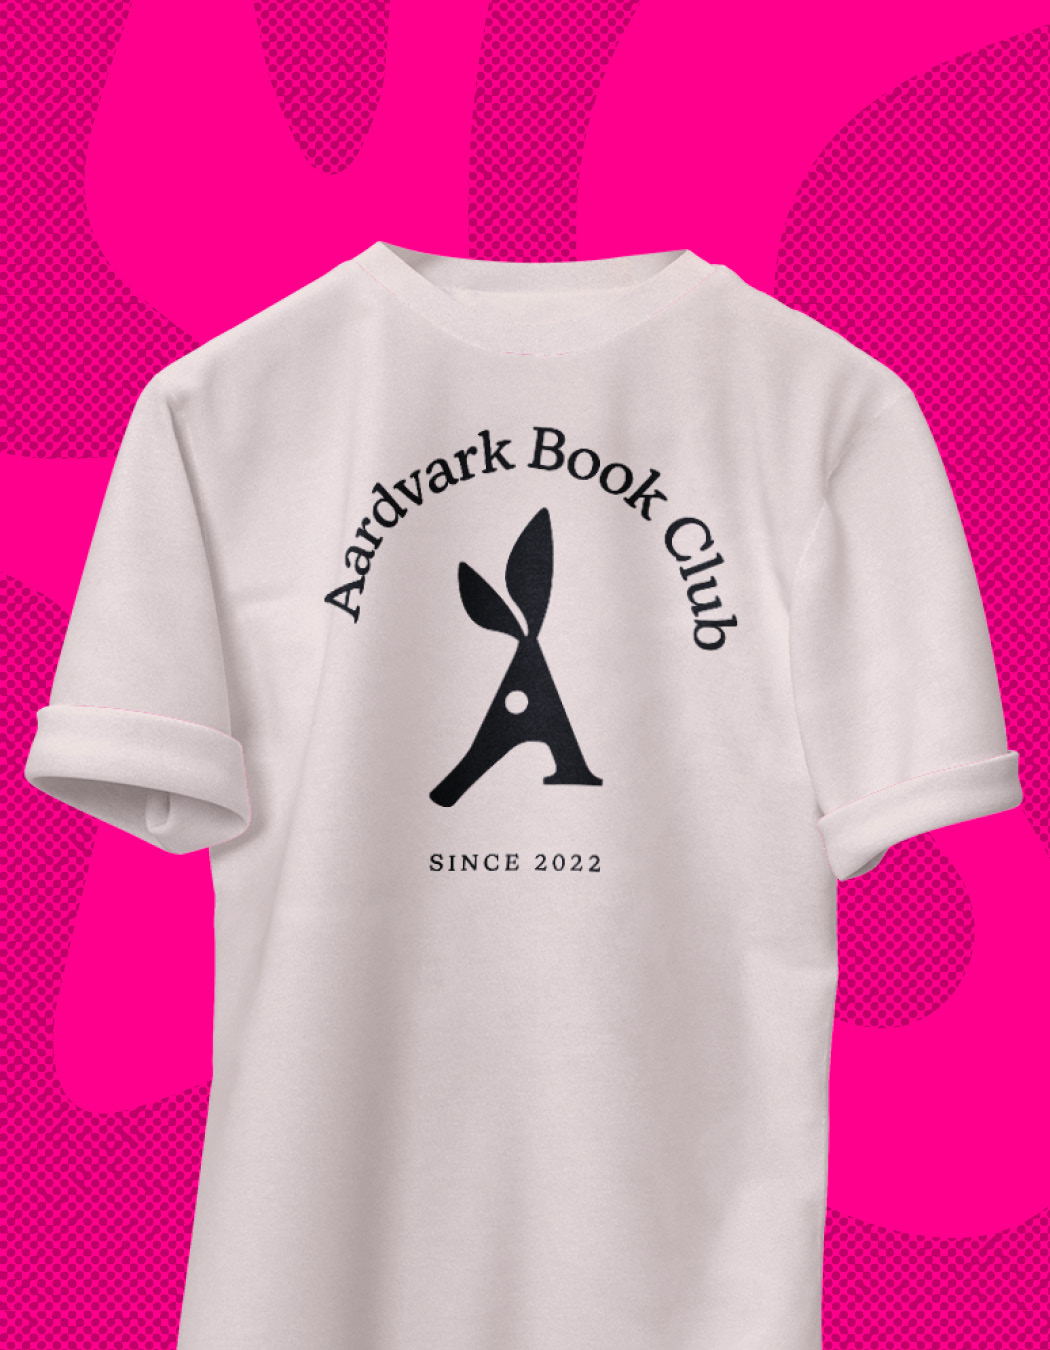 aardvark-book-club-logo-designer-branding-toronto